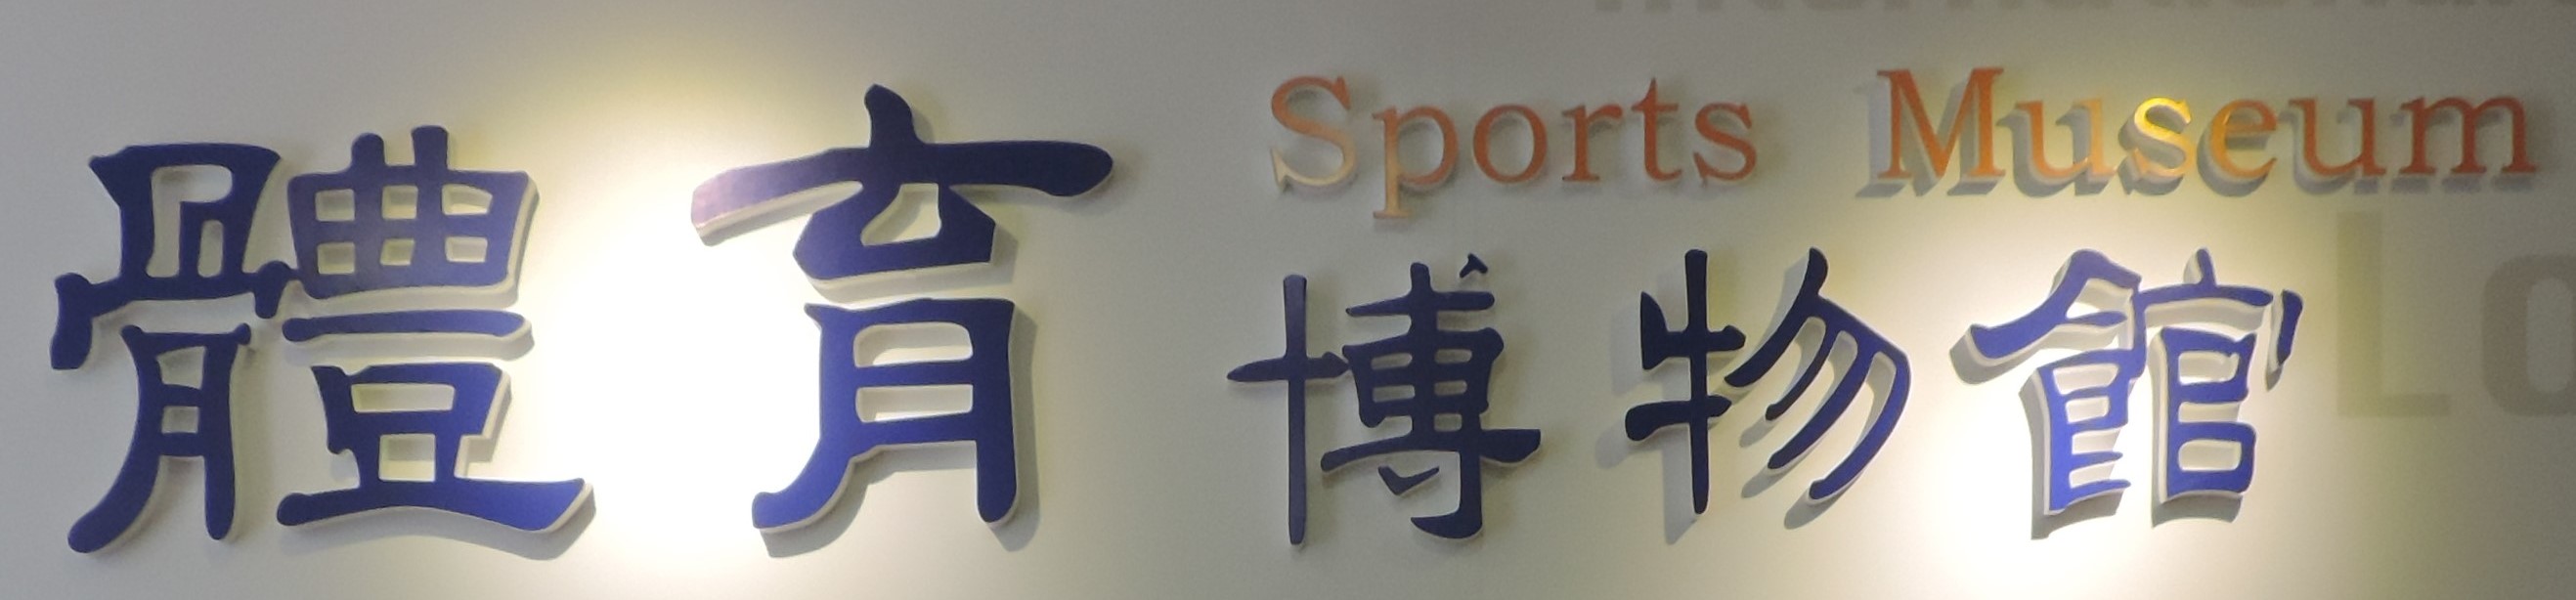 National Taiwan Sport University Sports Museum